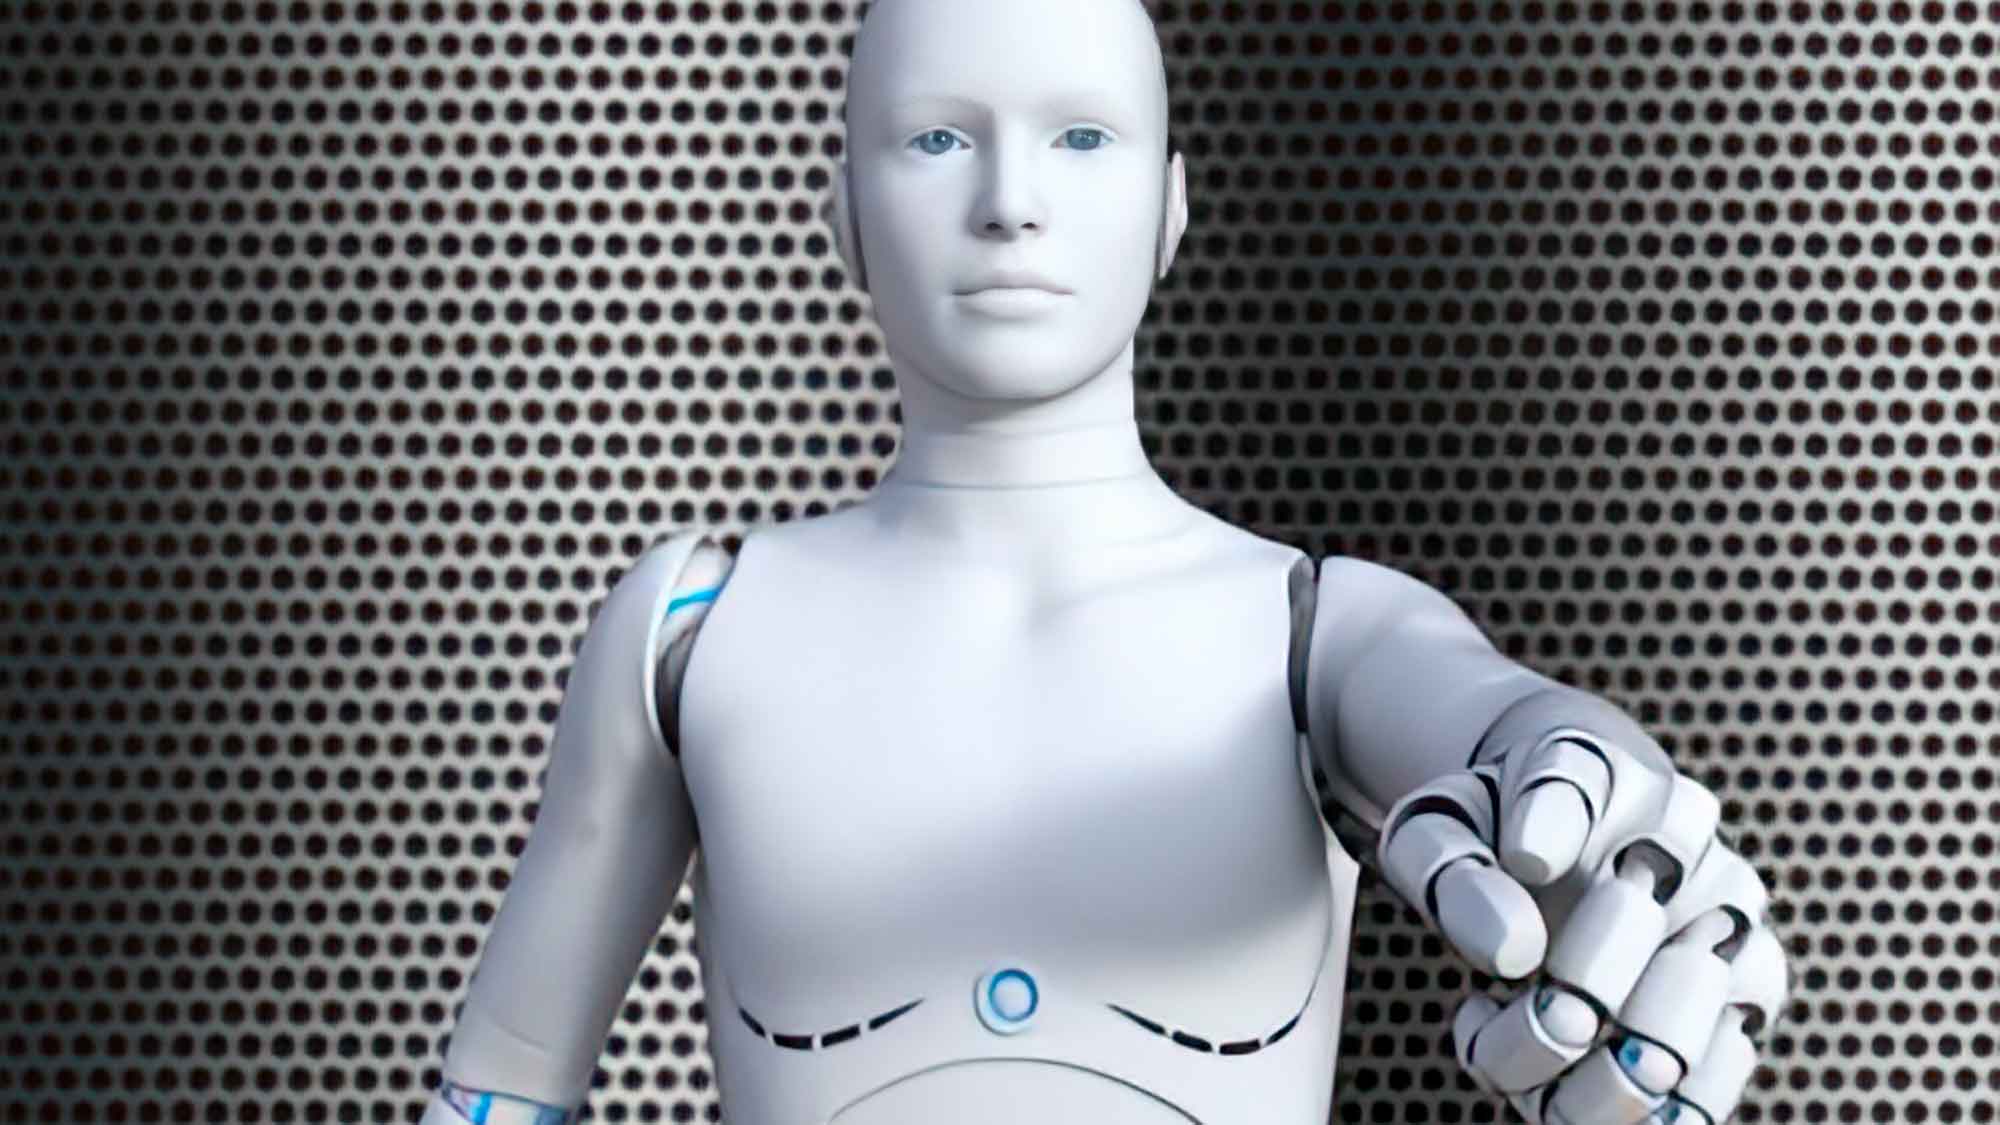 Rückblick 23: KI und Roboter sind Trendsetter